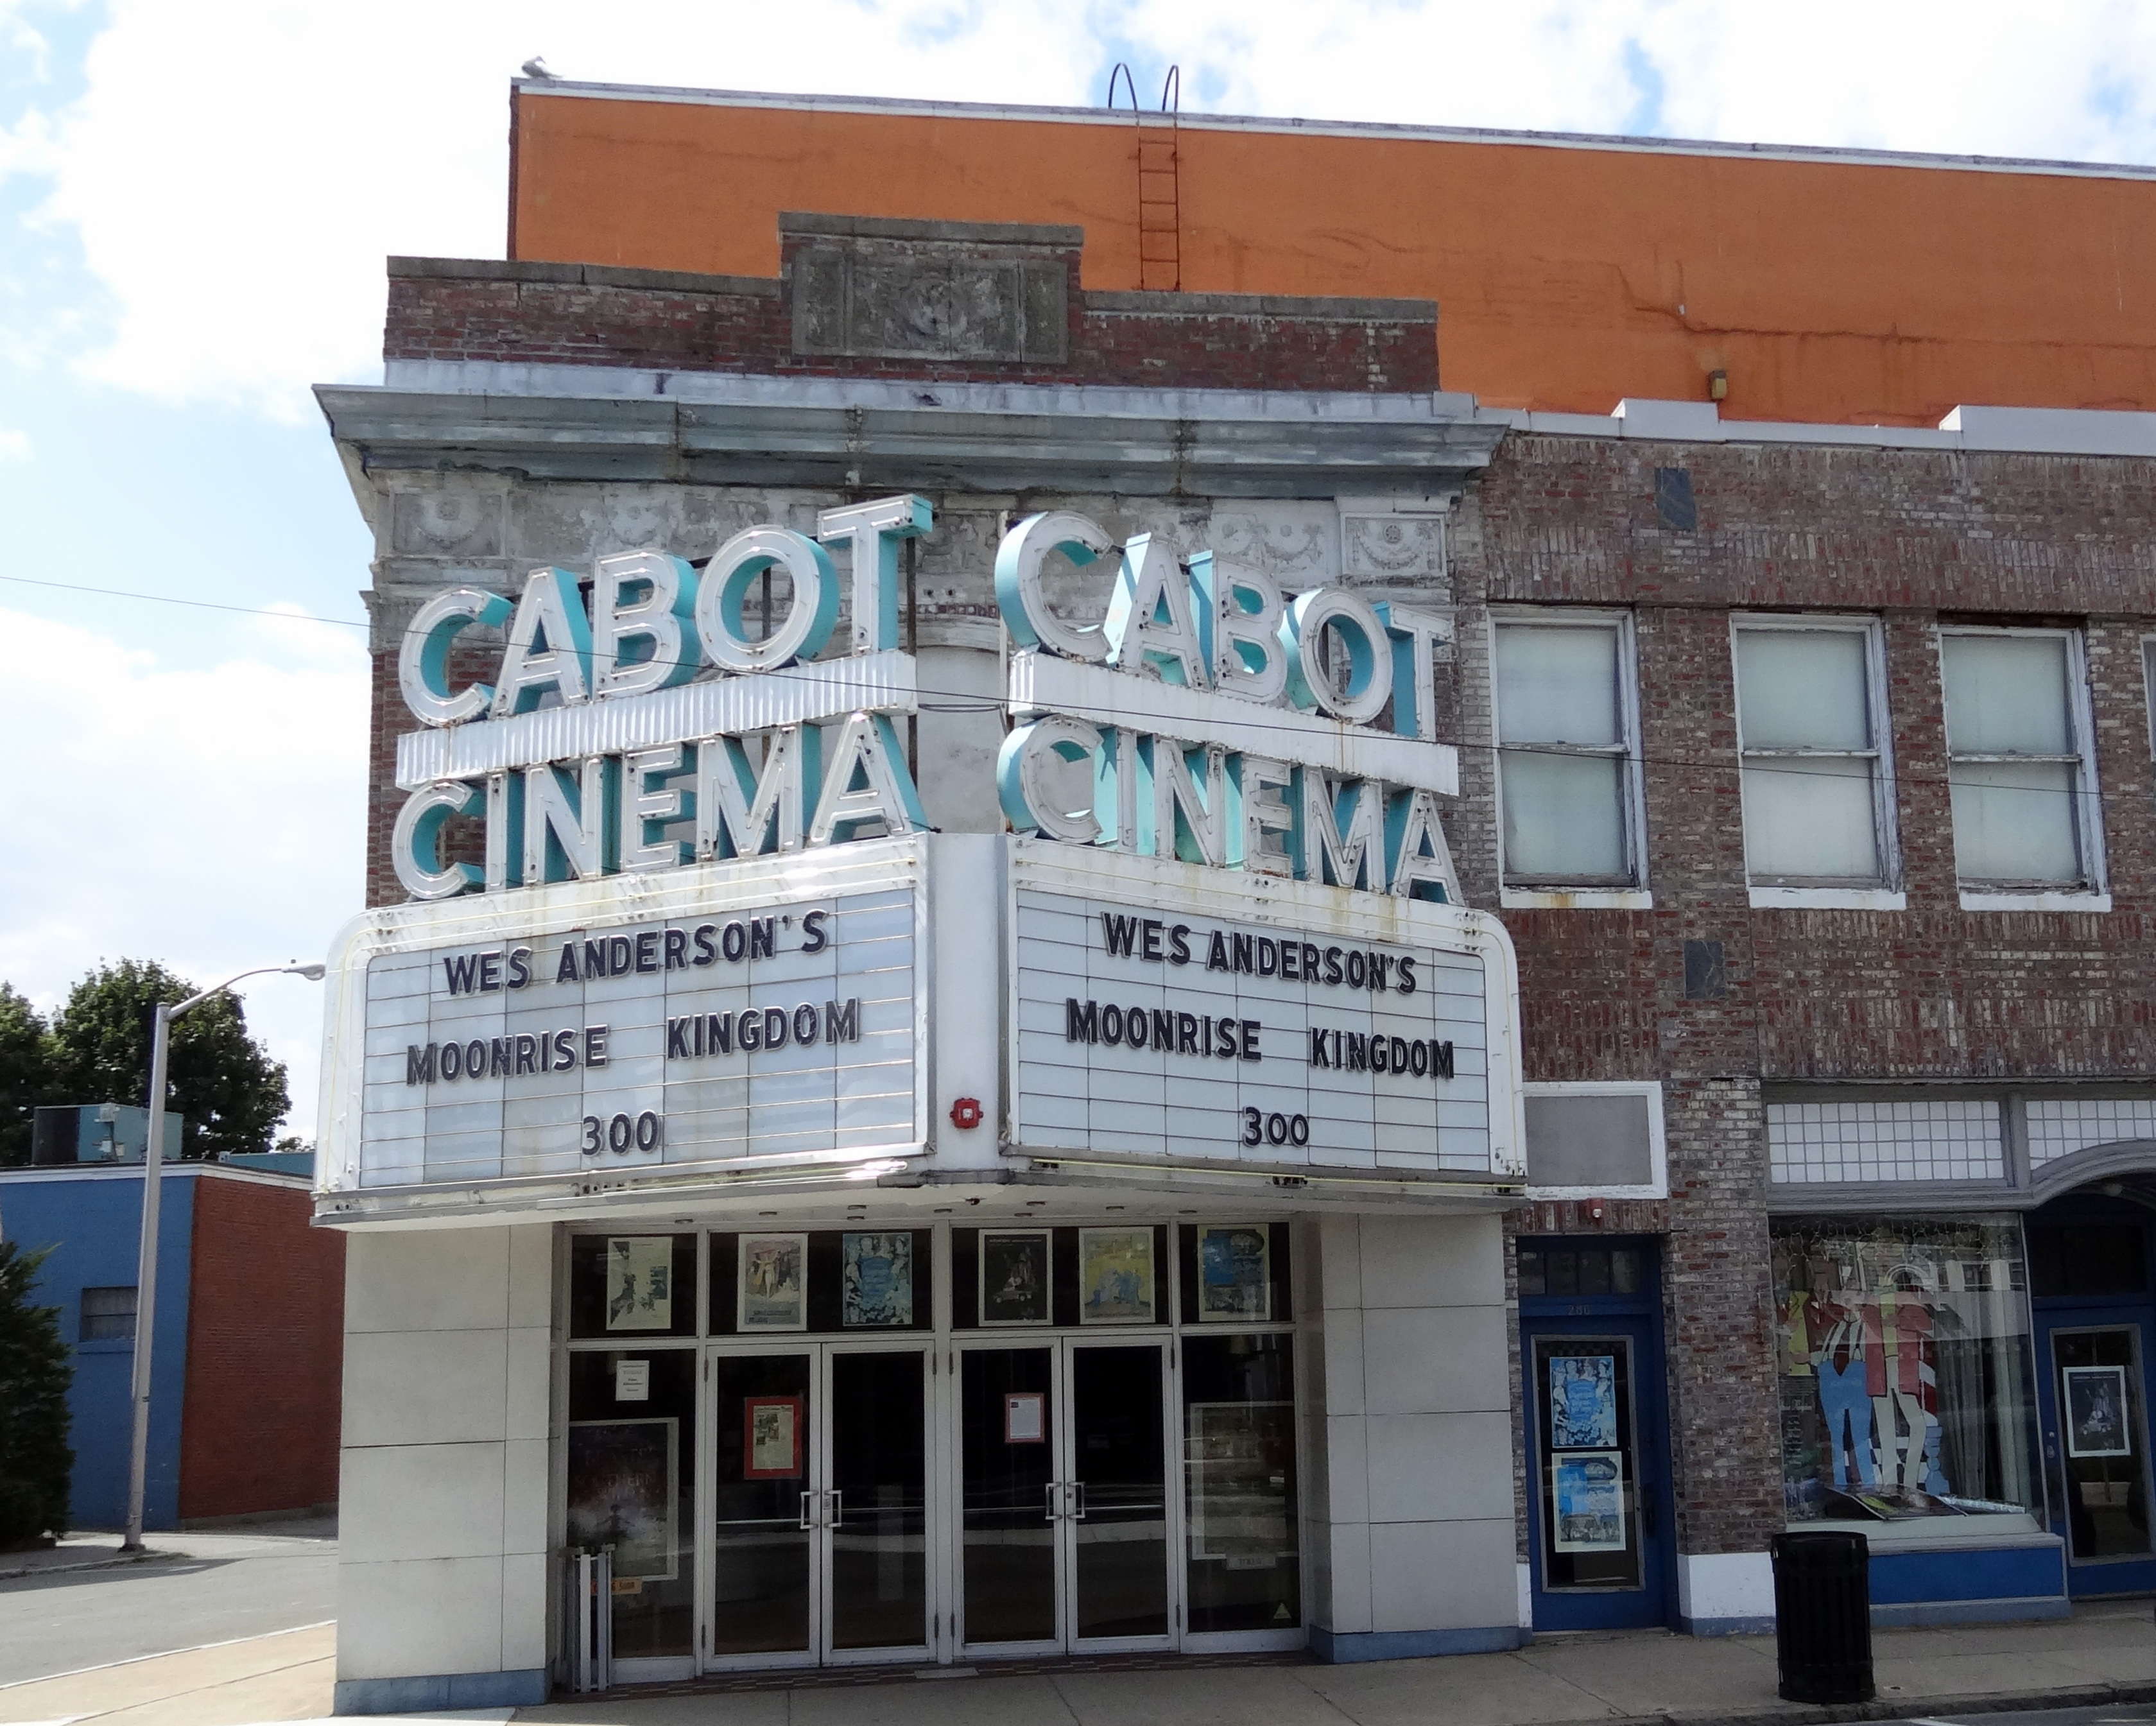 Cabot Cinema | Cabot Cinema 286 Cabot Street Beverly, Mass… | Flickr